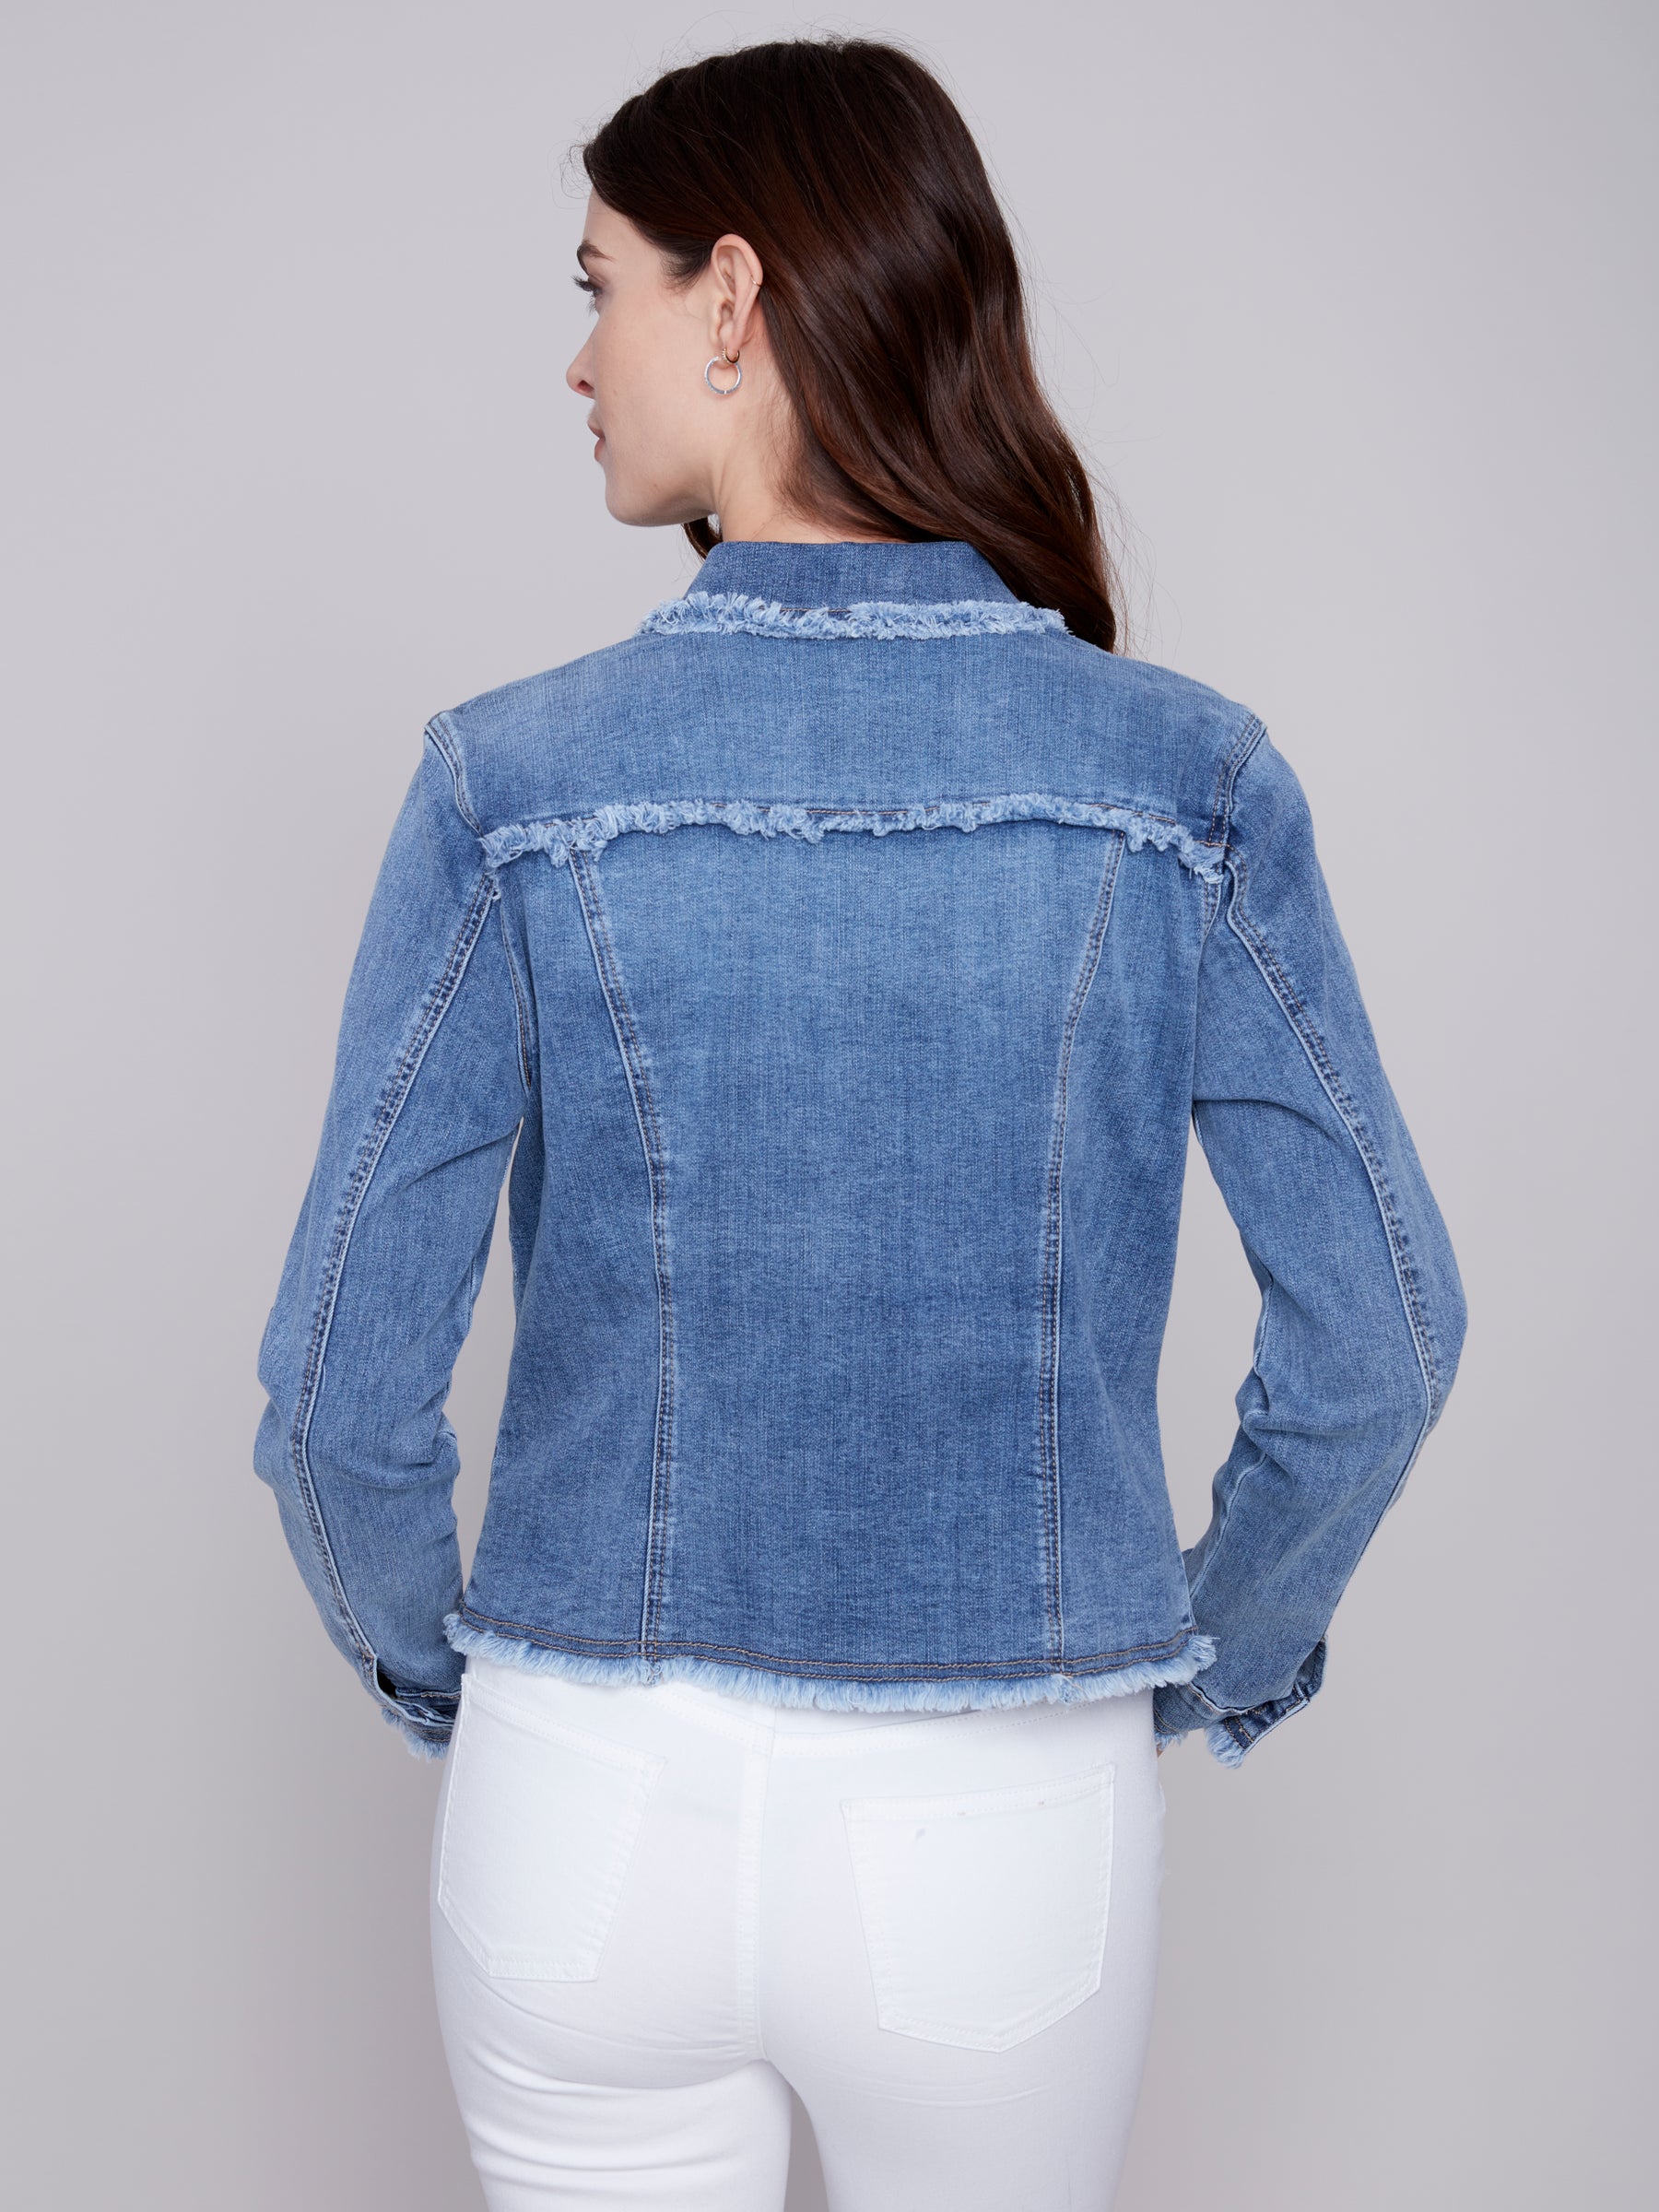 Jeans jacket Charlie B C6233-BLUE-MEDIUM